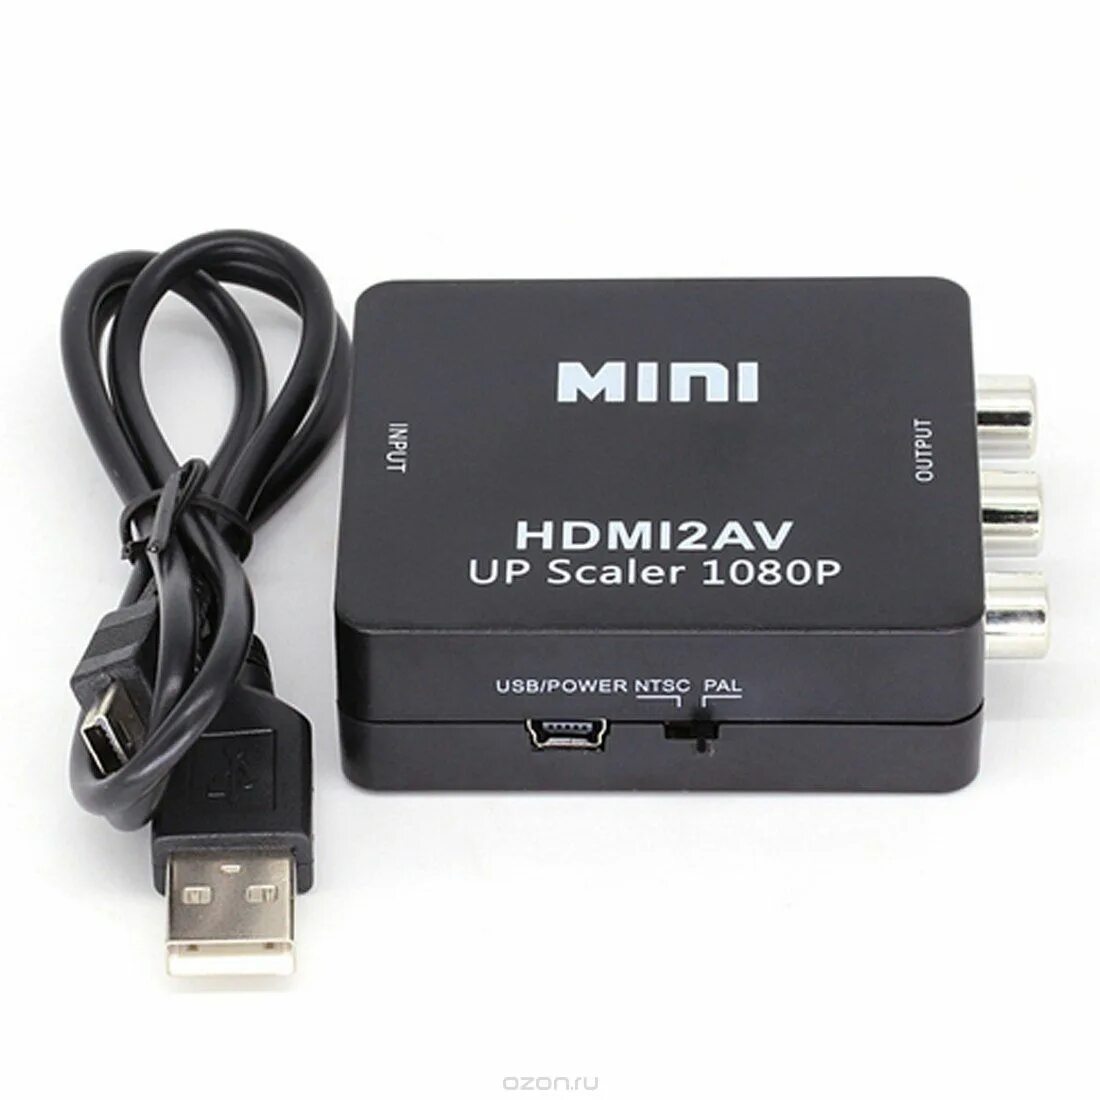 Переходник Mini VGA 2 HDMI CVBS. Видео конвертер Mini av2hdmi. Адаптер hdmi2av Mini. Mini HDMI 2av переходник.